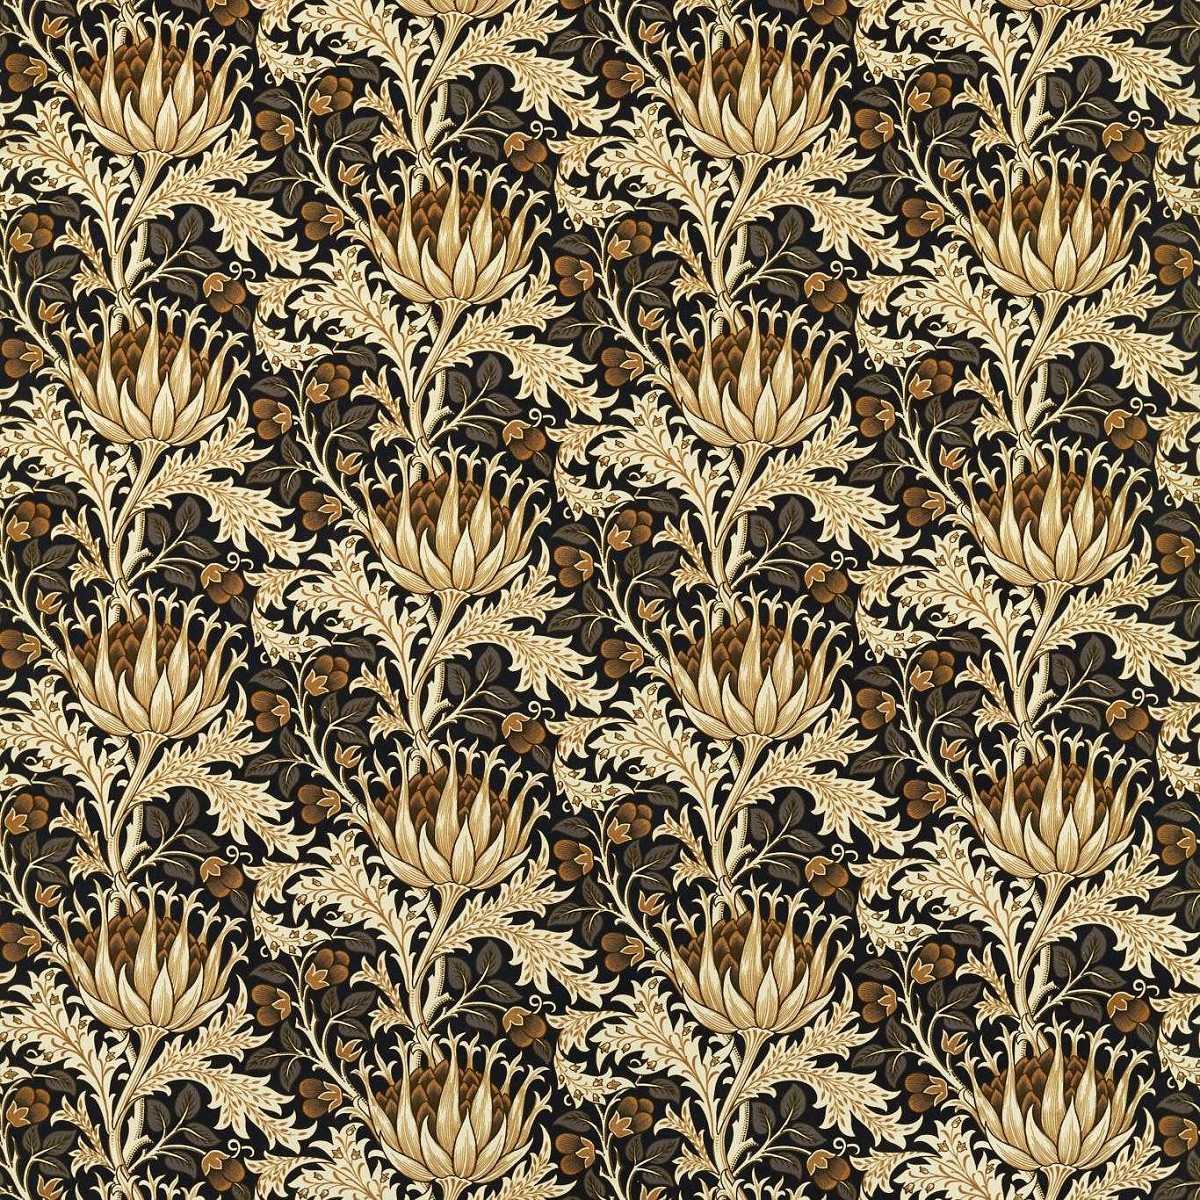 Artichoke Velvet Midnight/Pearwood Fabric by William Morris & Co.